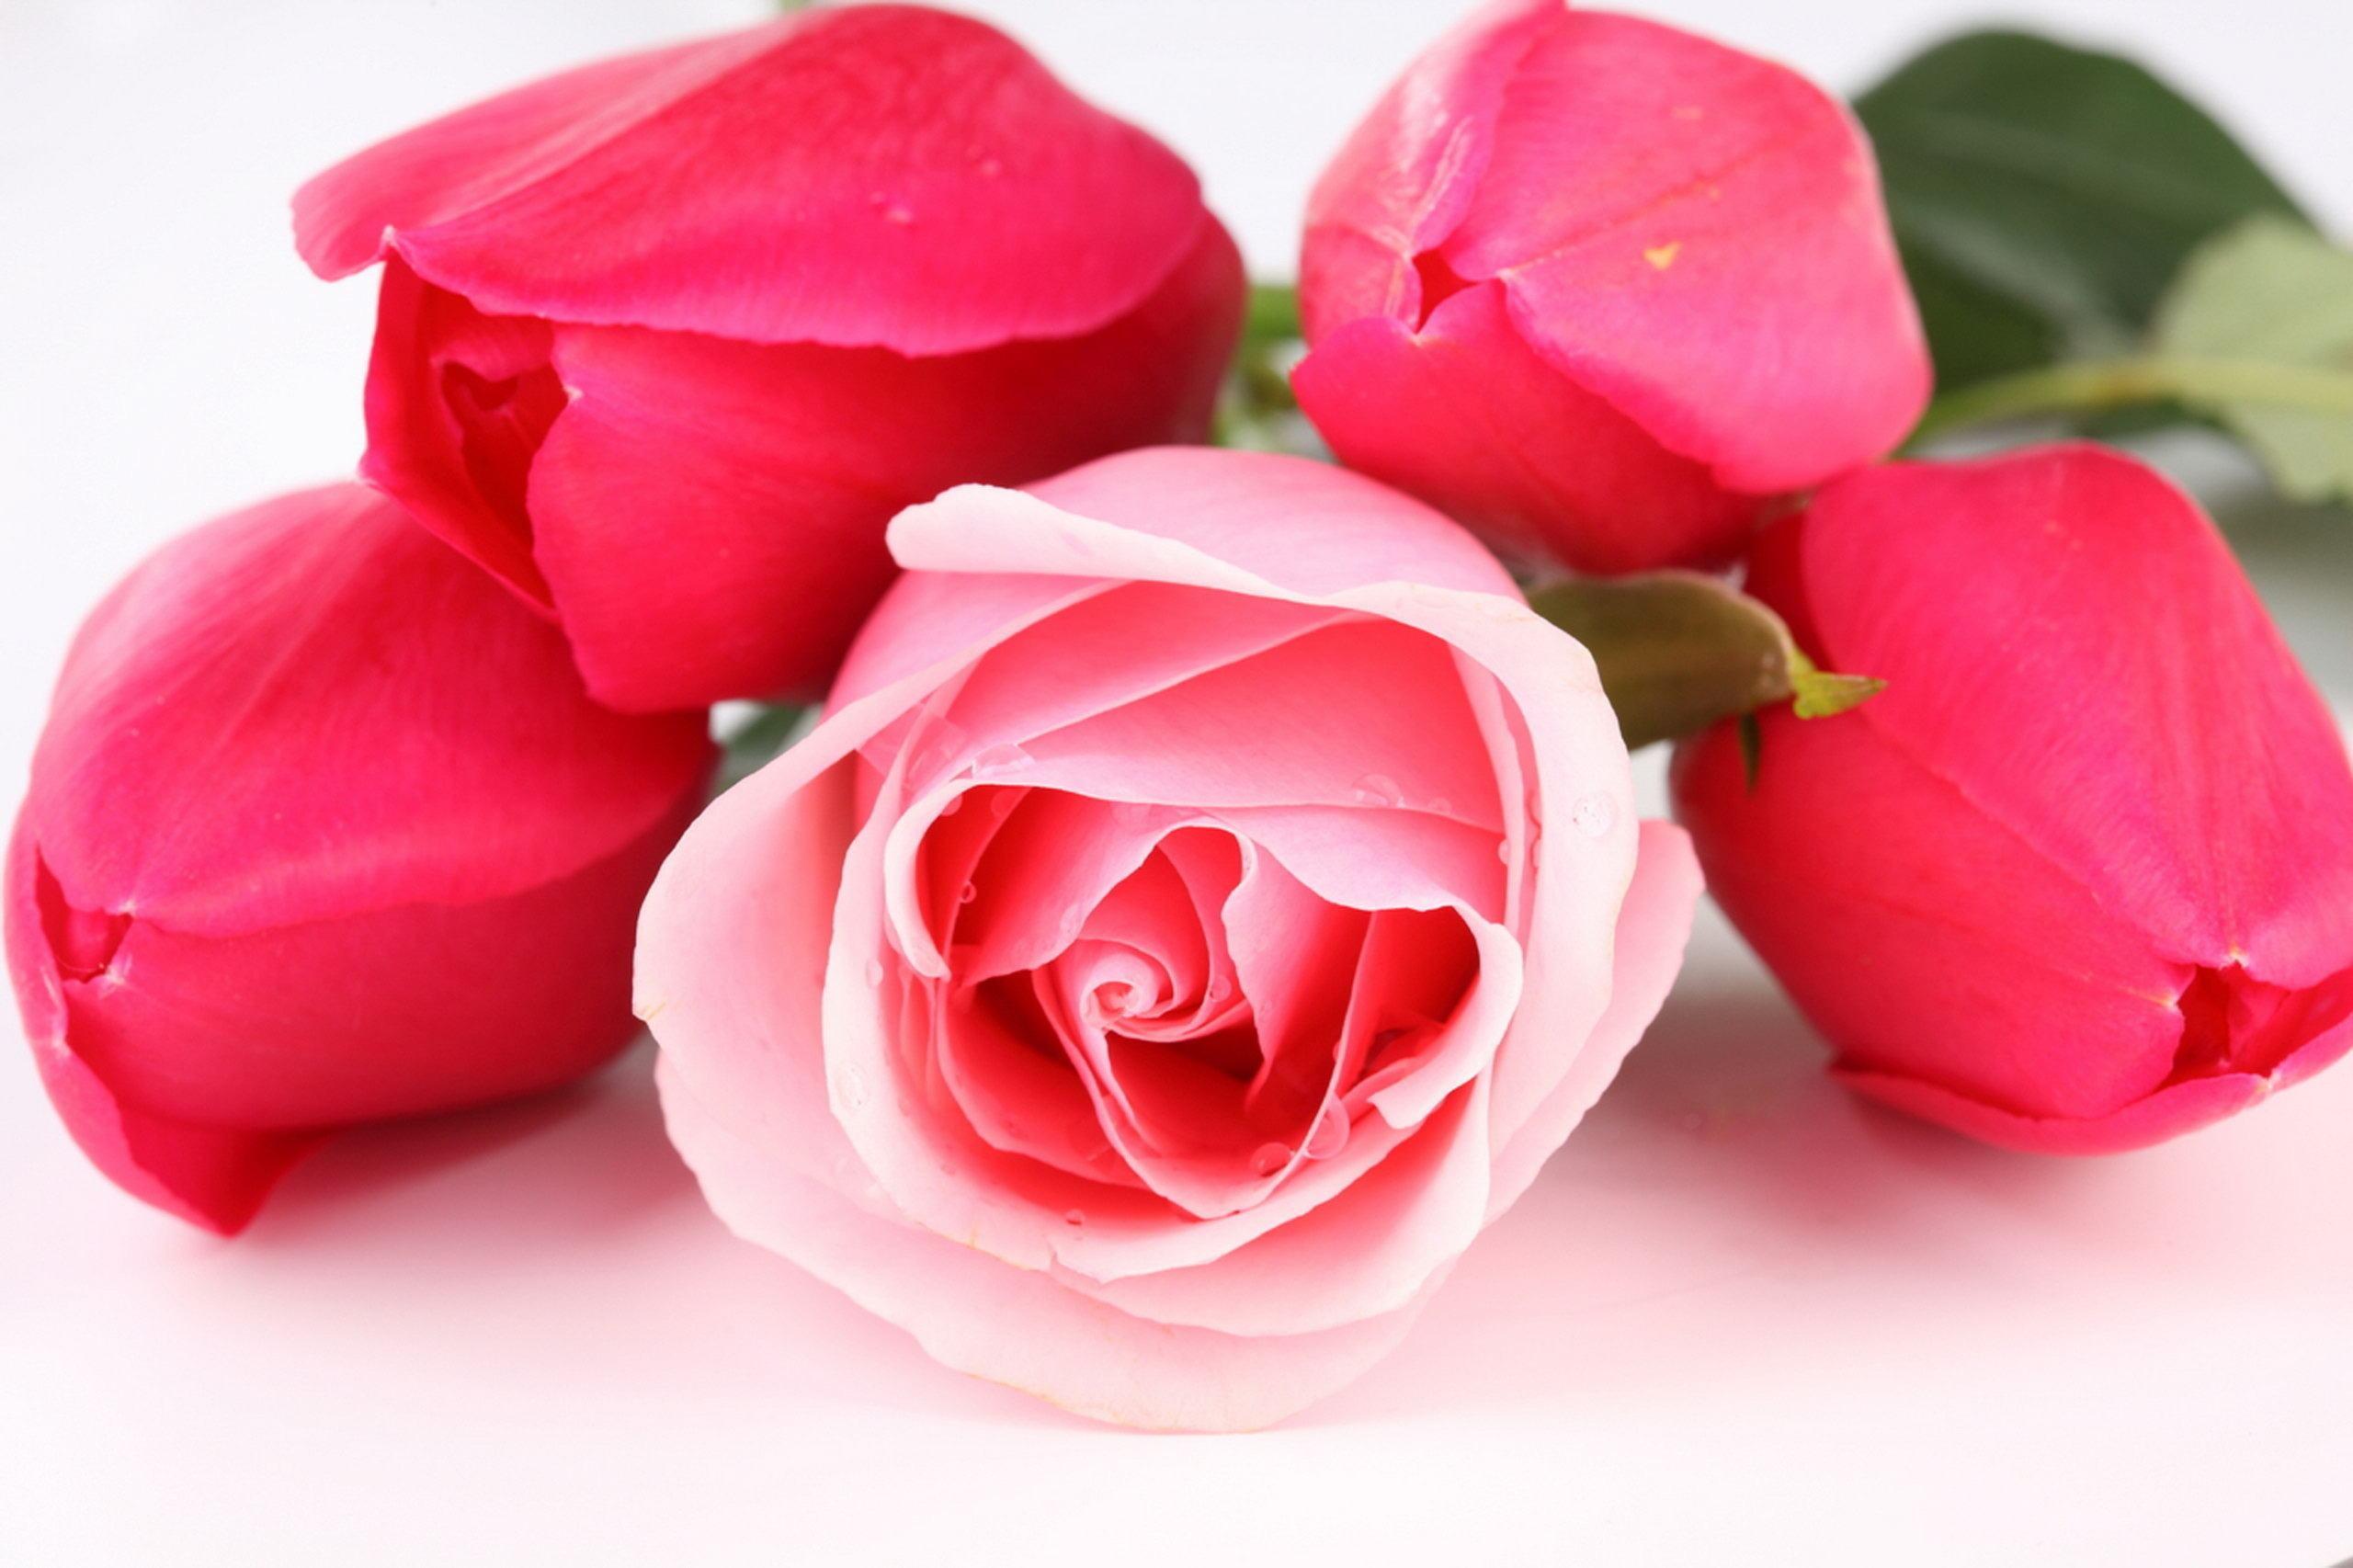 Rose Flower HD Wallpaper 1080p Background Image Of Laptop Flowers